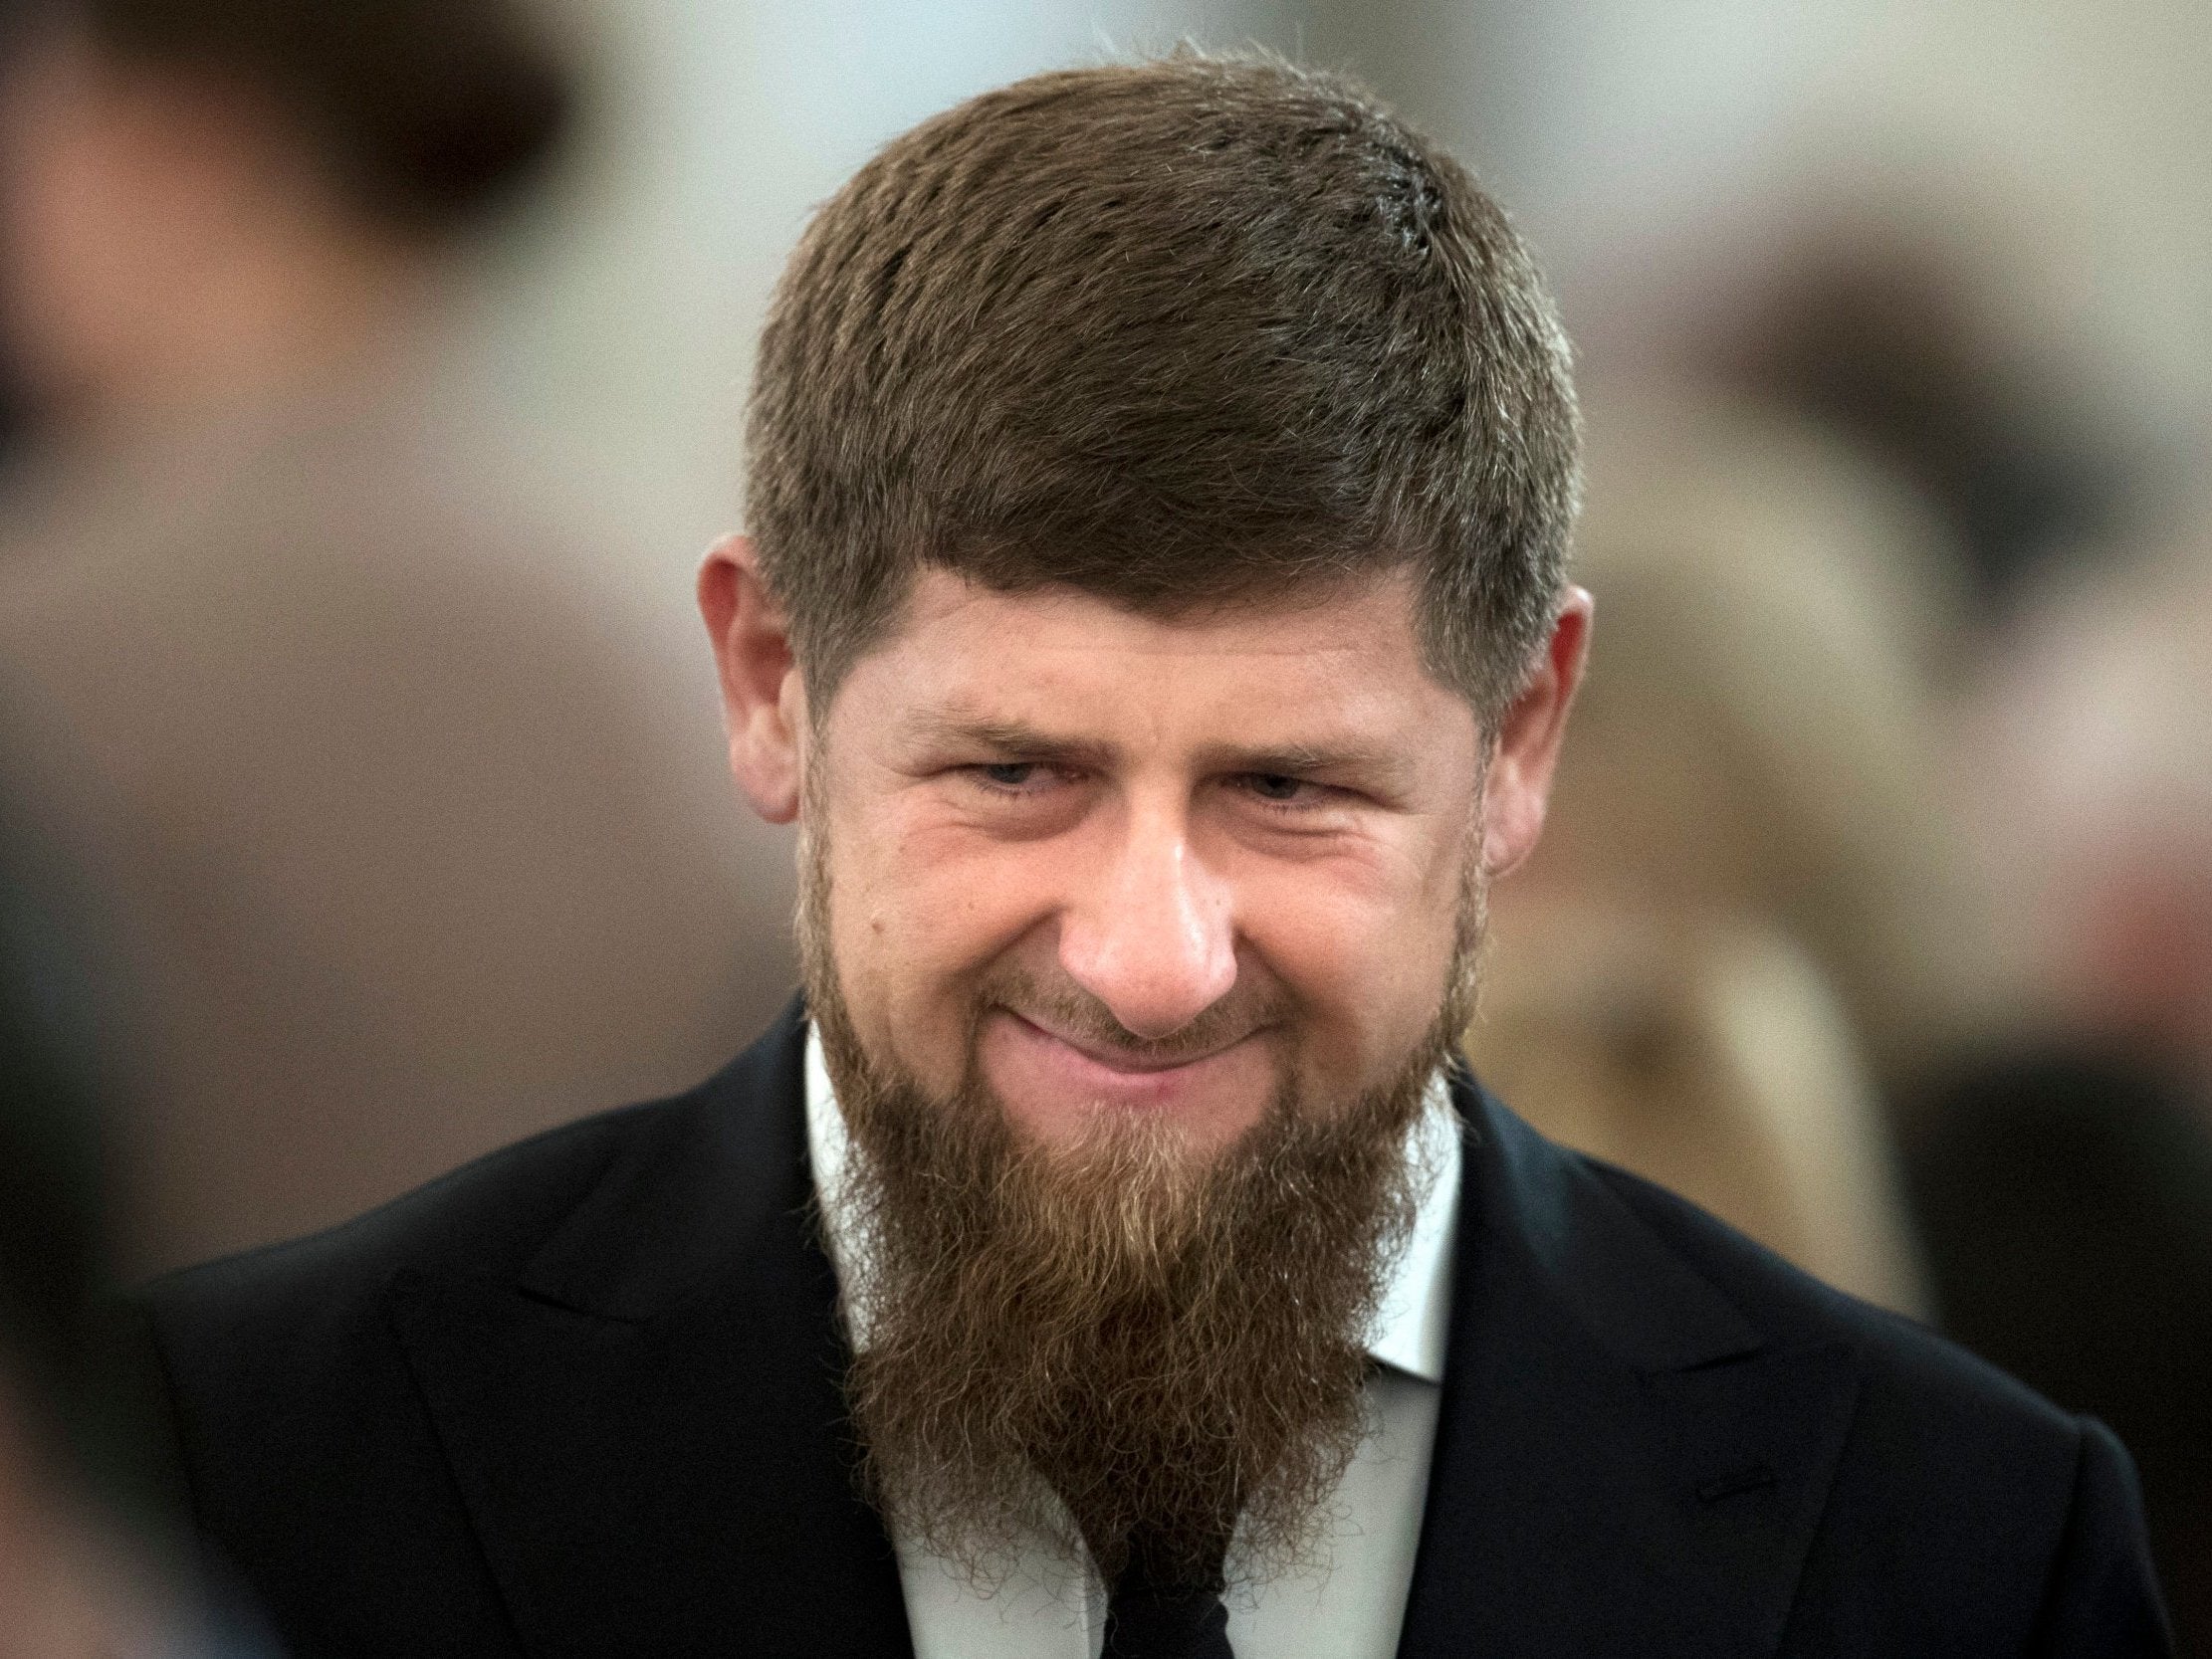 Ramzan Kadyrov brushed off accusations after Madina Umaeva, 23, died under suspicious circumstances